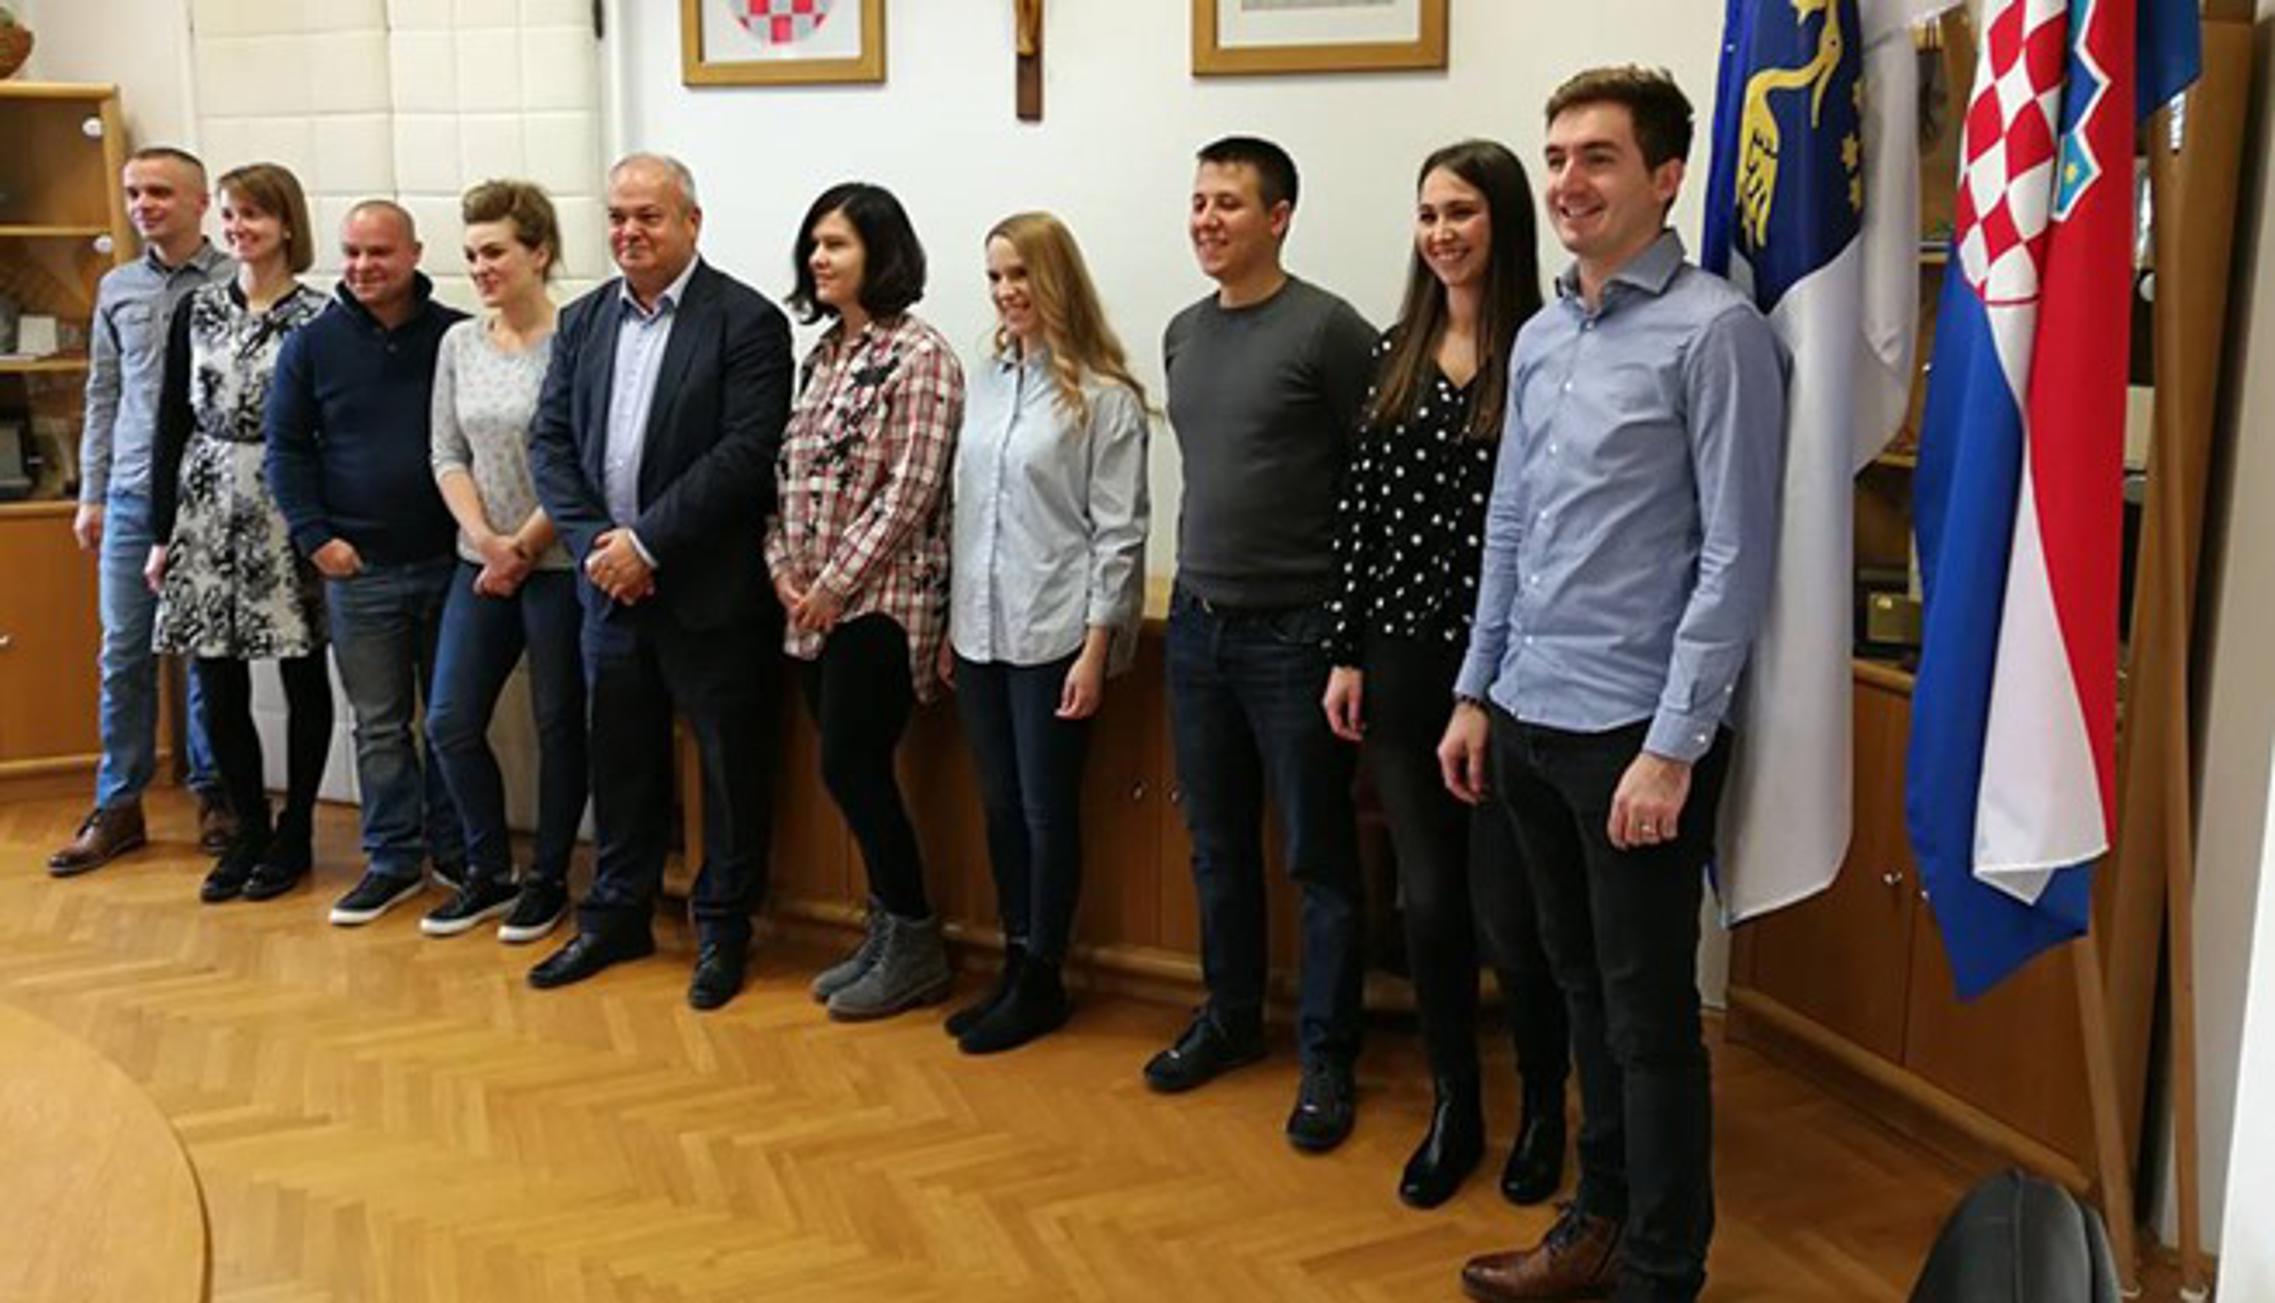 Mlade obitelji s gradonačelnikom Mirkom Dusparom